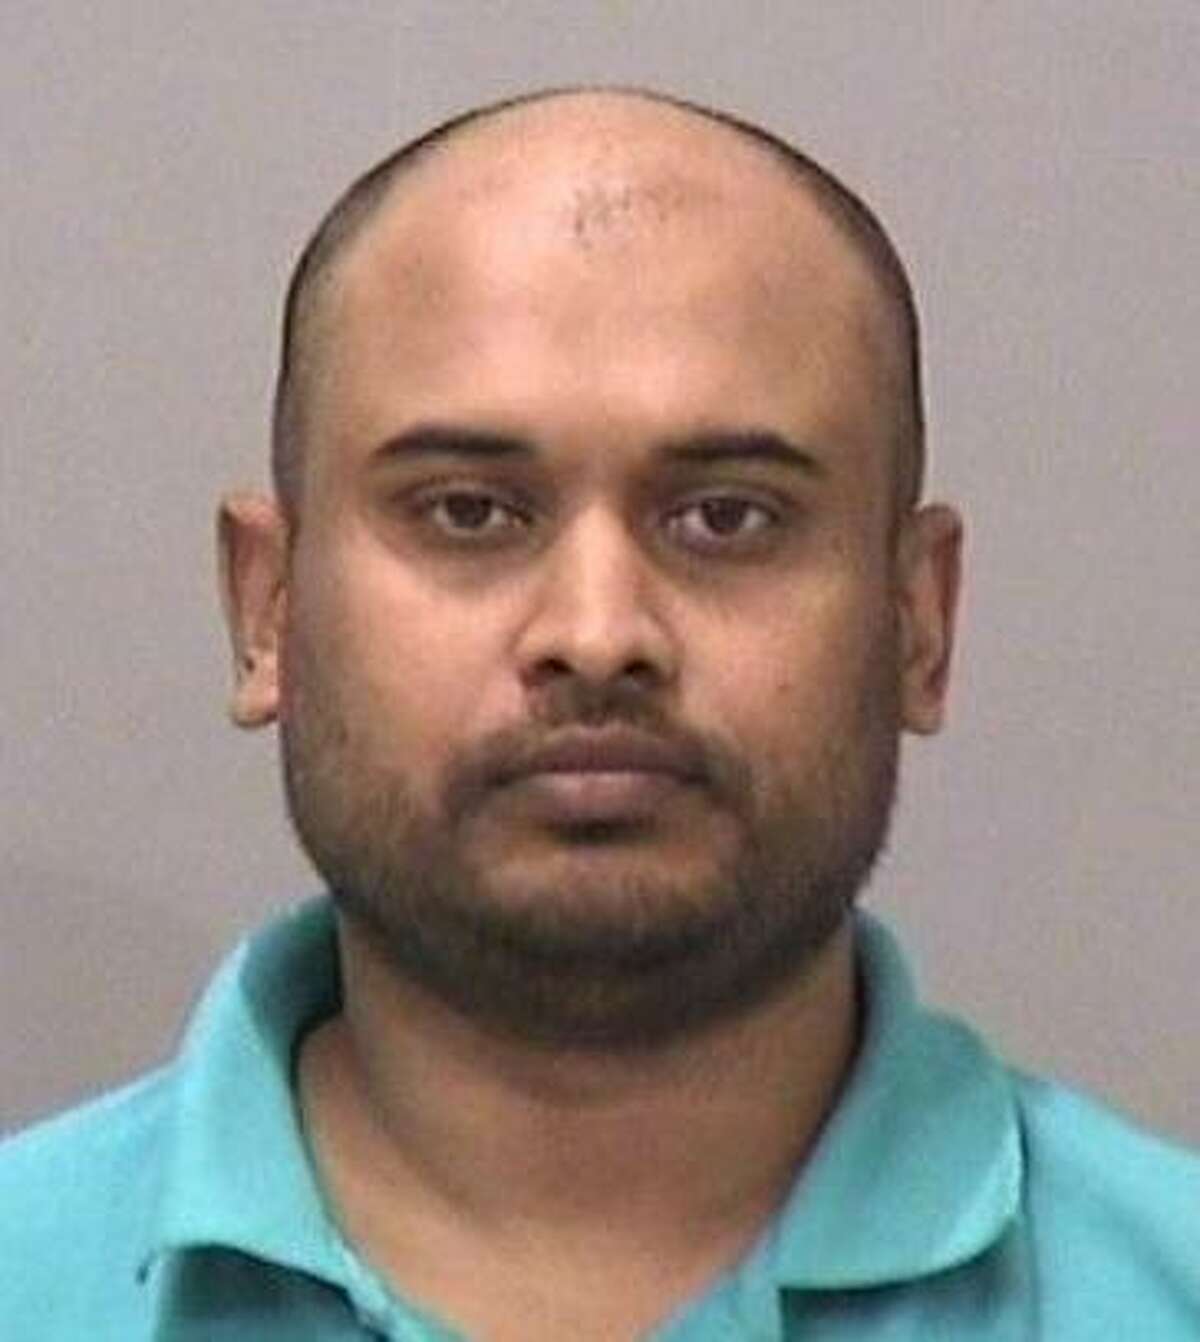 Maninder Adama, 33, was arrested in Fremont last week, police said.